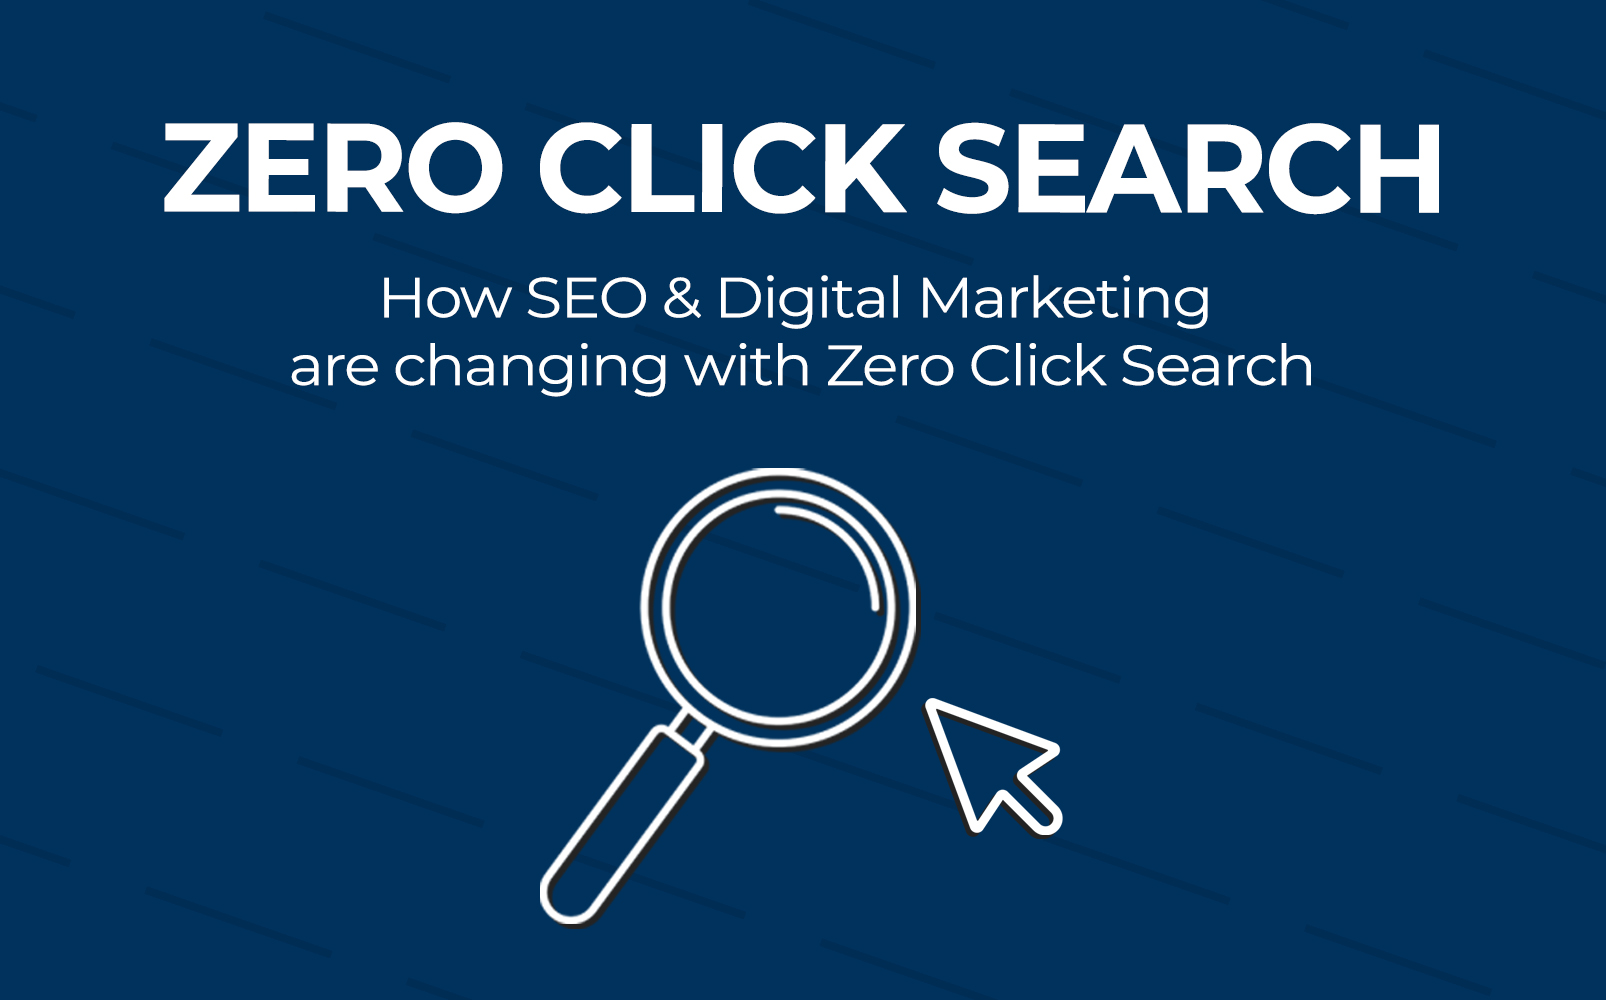 ZeroClickSearch